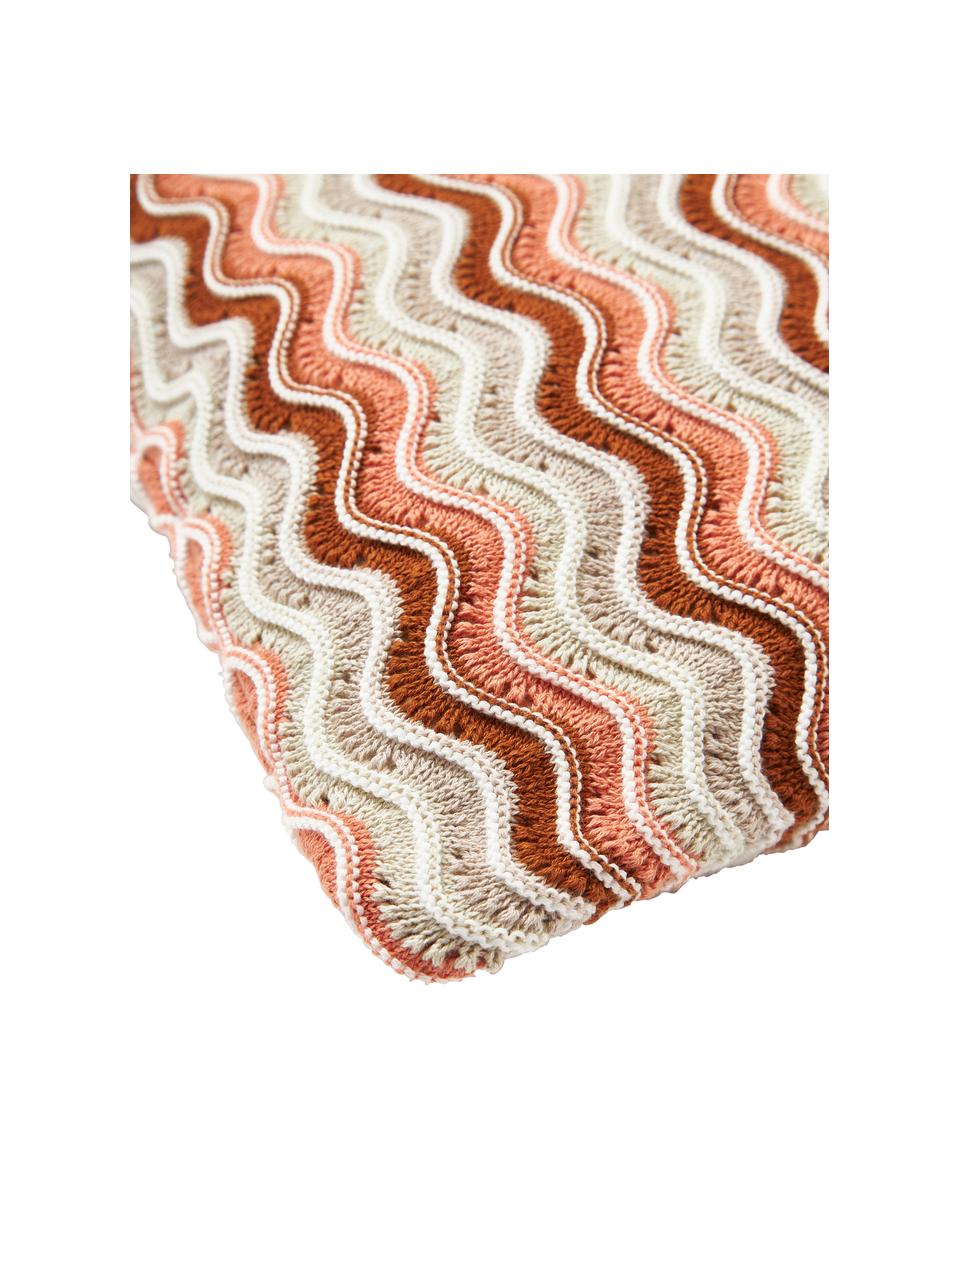 Federa arredo a maglia in cotone Emilio, 100% cotone, Beige, terracotta, salmone, Larg. 45 x Lung. 45 cm